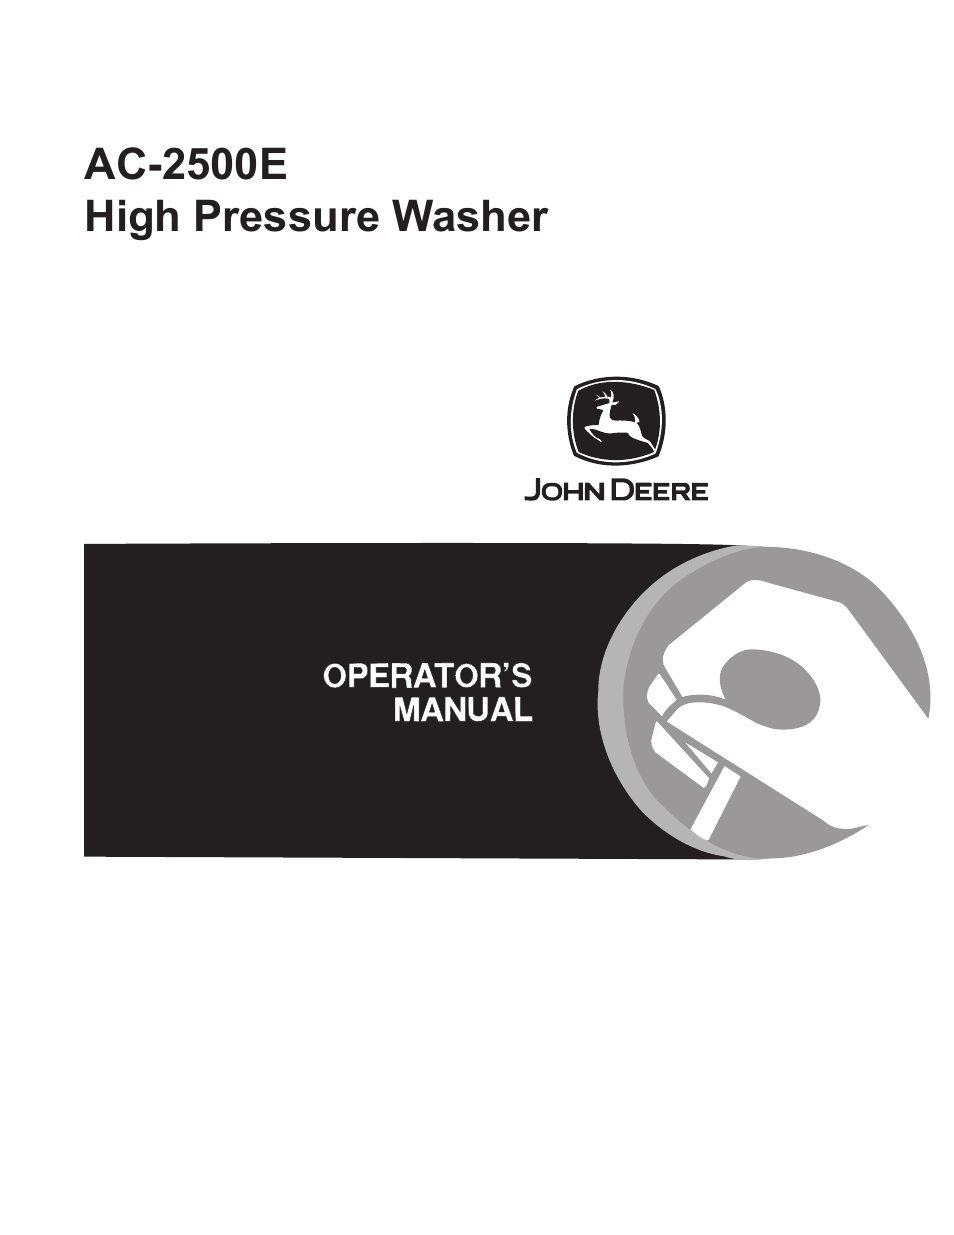 John Deere AC-2500E User Manual | 64 pages